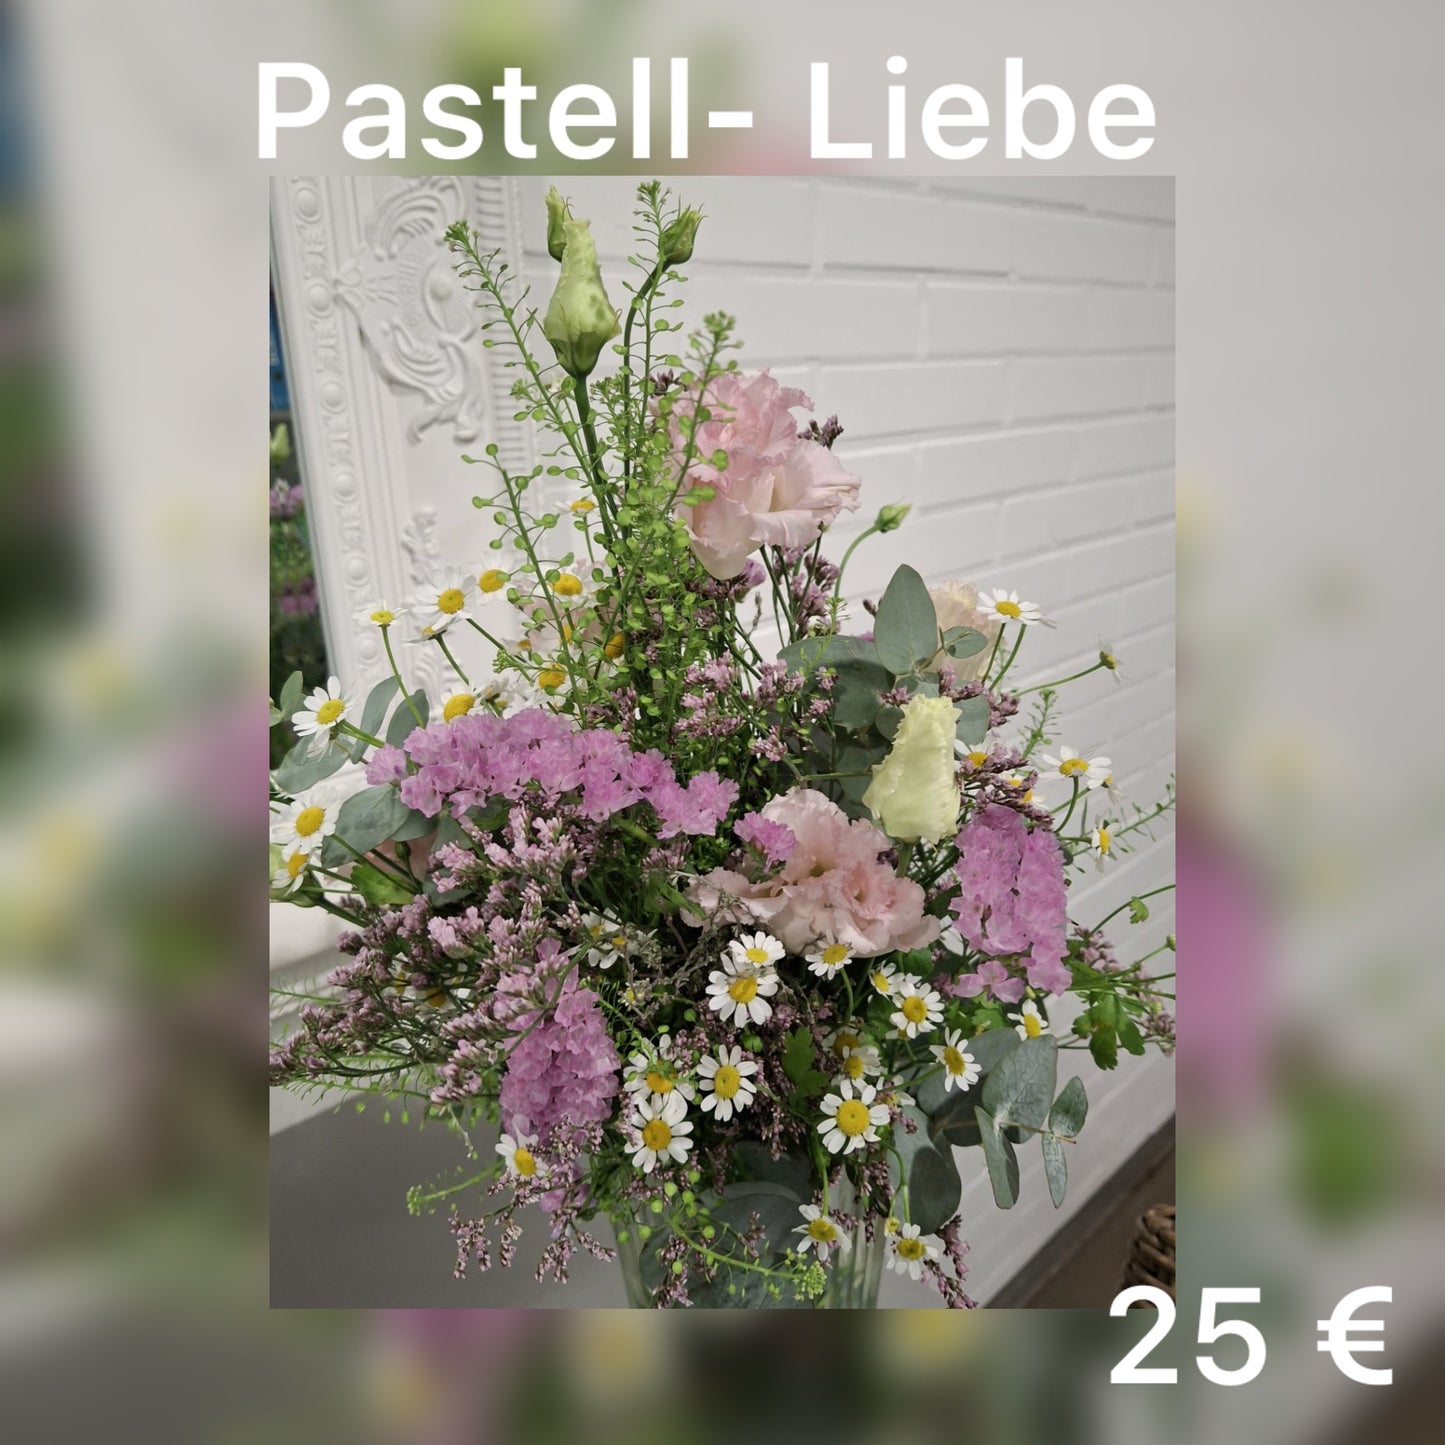 Pastell- Liebe